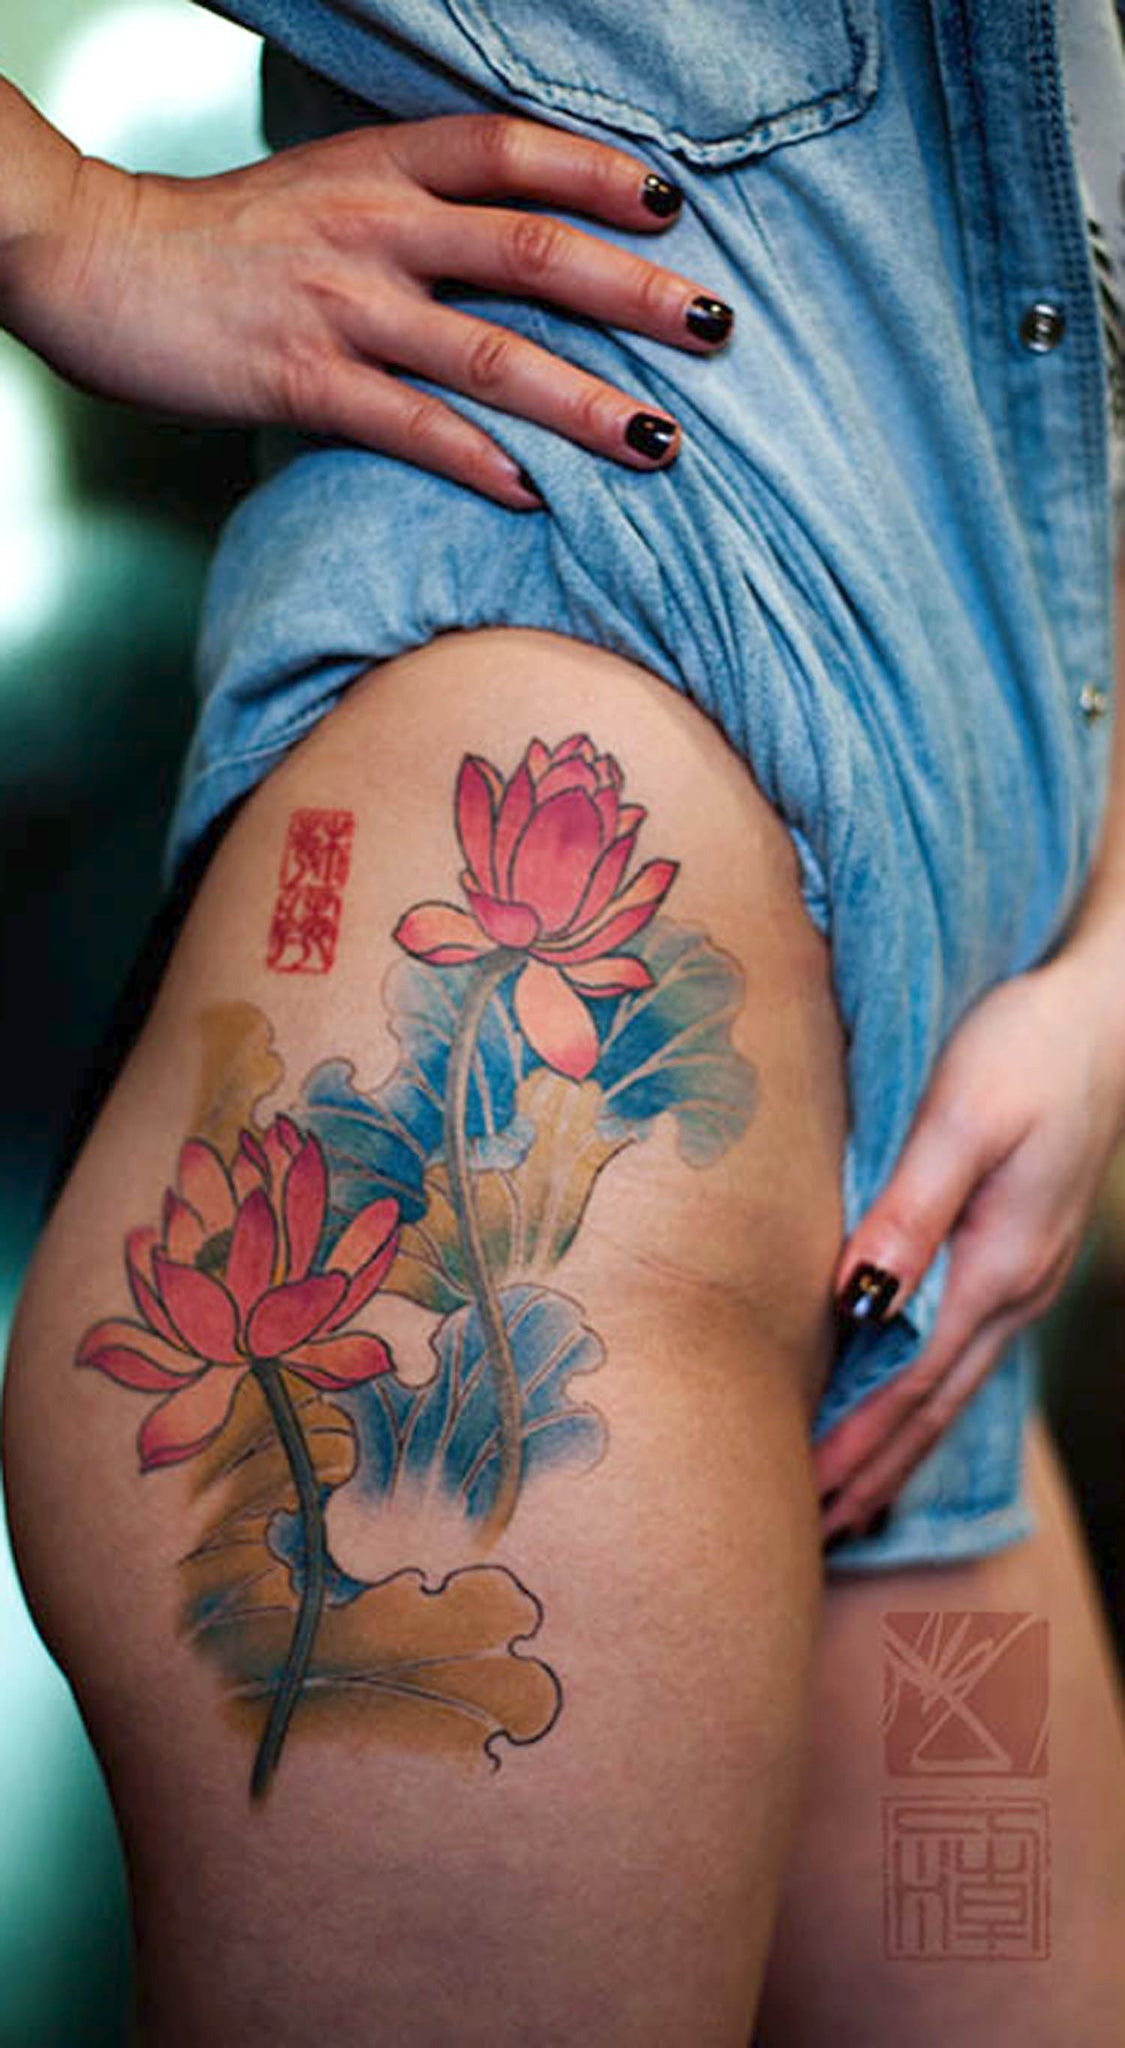 Colorful Water Lily Thigh Tattoo Ideas for Women - Women's Watercolor Asian Flower Hip Tat -  ideas asiáticas del tatuaje del muslo del lirio de agua - www.MyBodiArt.com